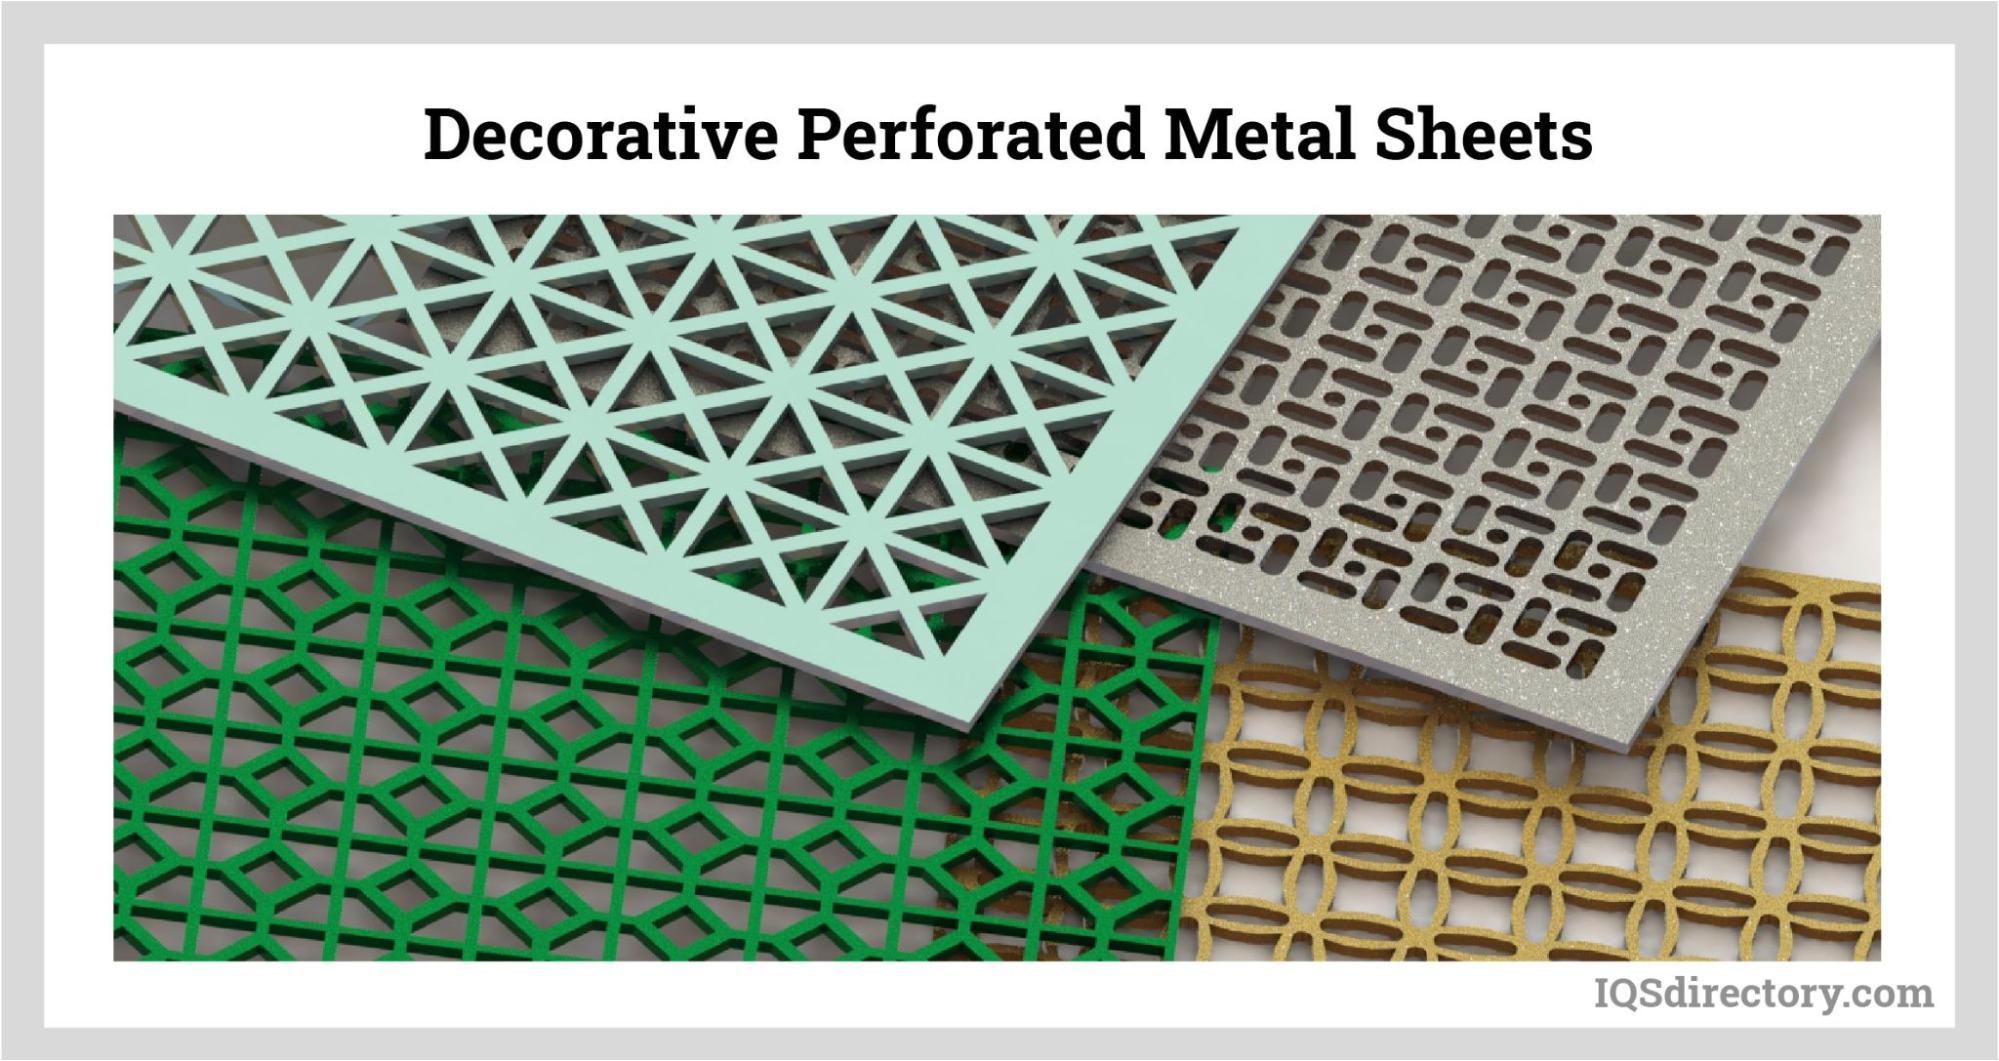 Decorative Perforated Metal Sheets